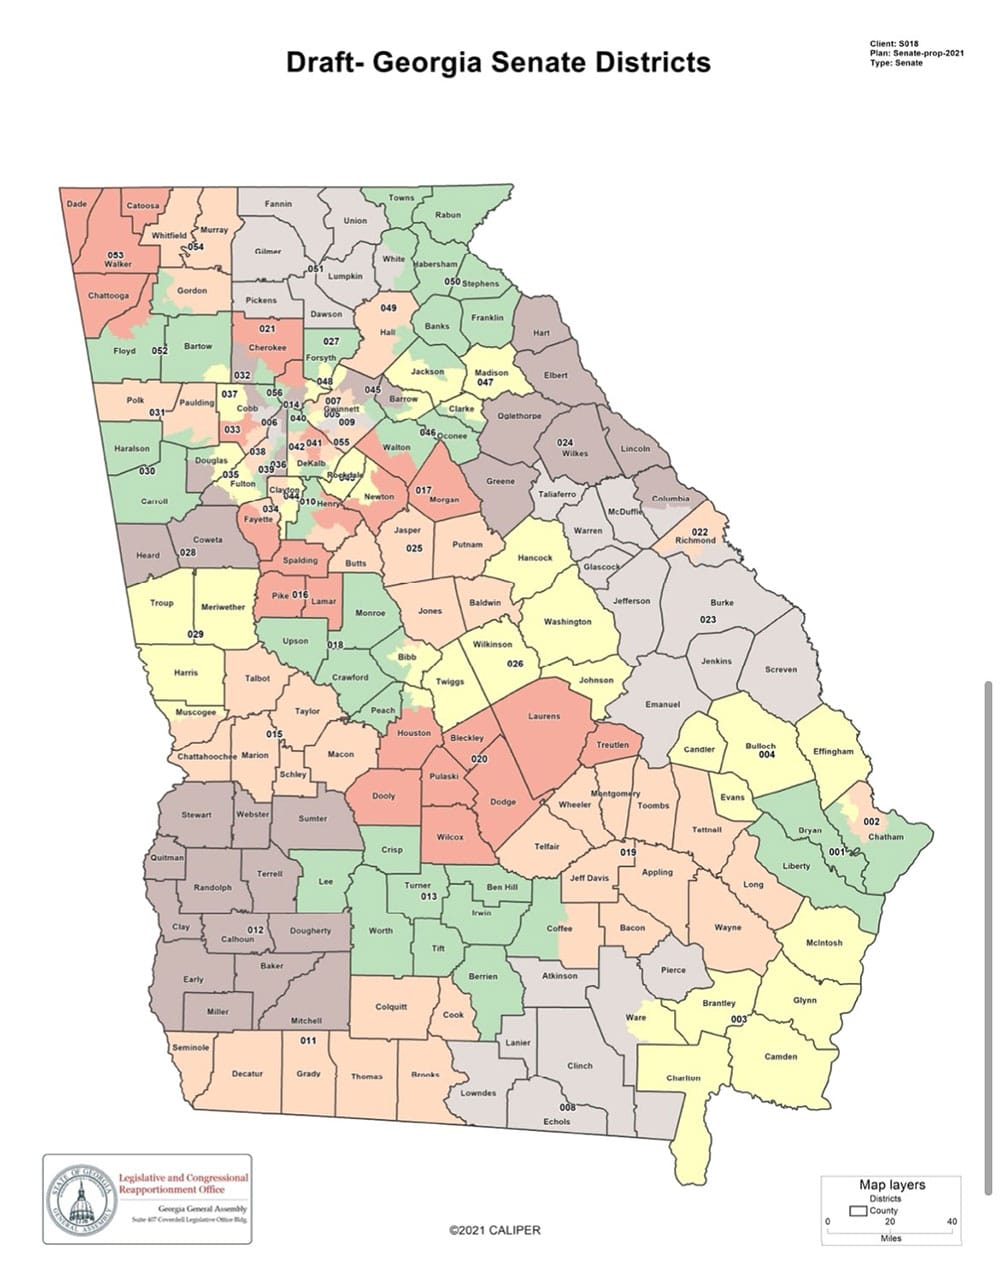 Lt. Governor Geoff Duncan and Senate Majority Caucus Release Draft of Georgia Senate Map